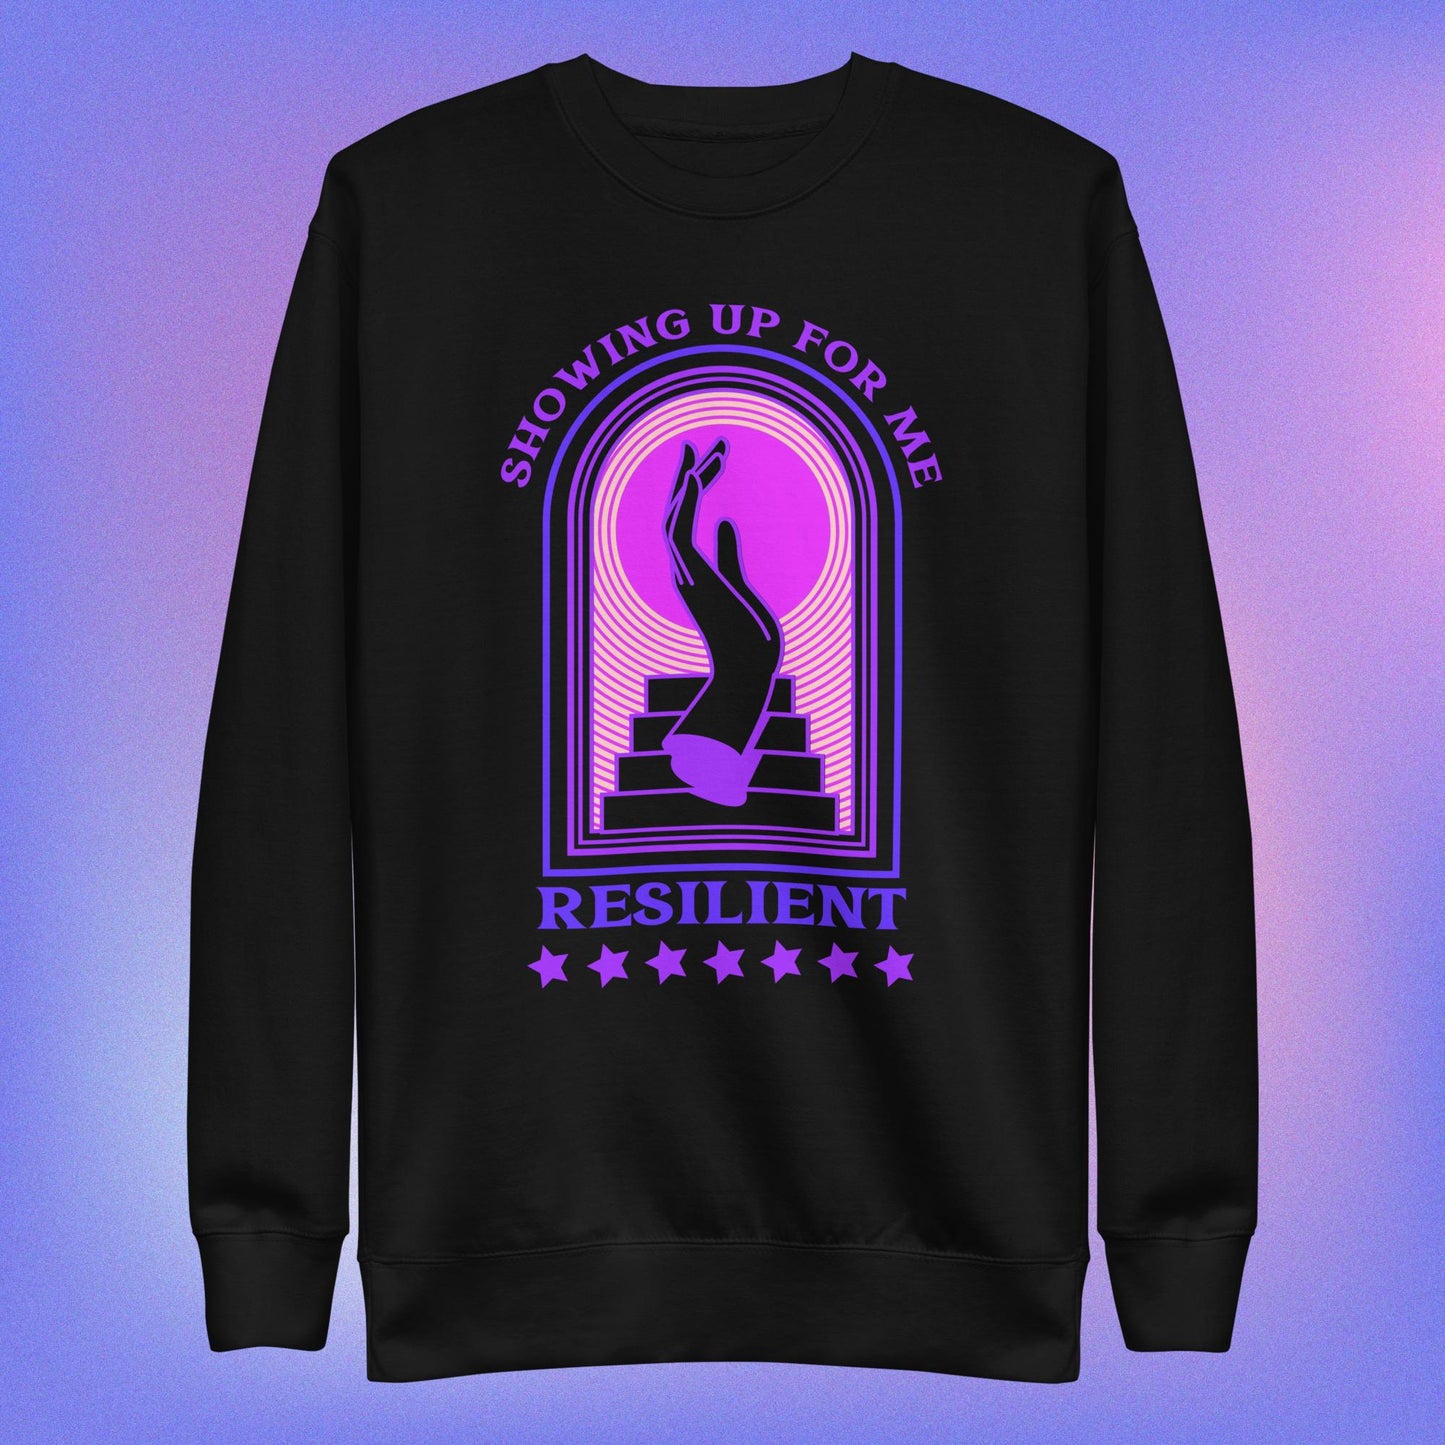 Showing Up Resilient: Unisex Premium Sweatshirt